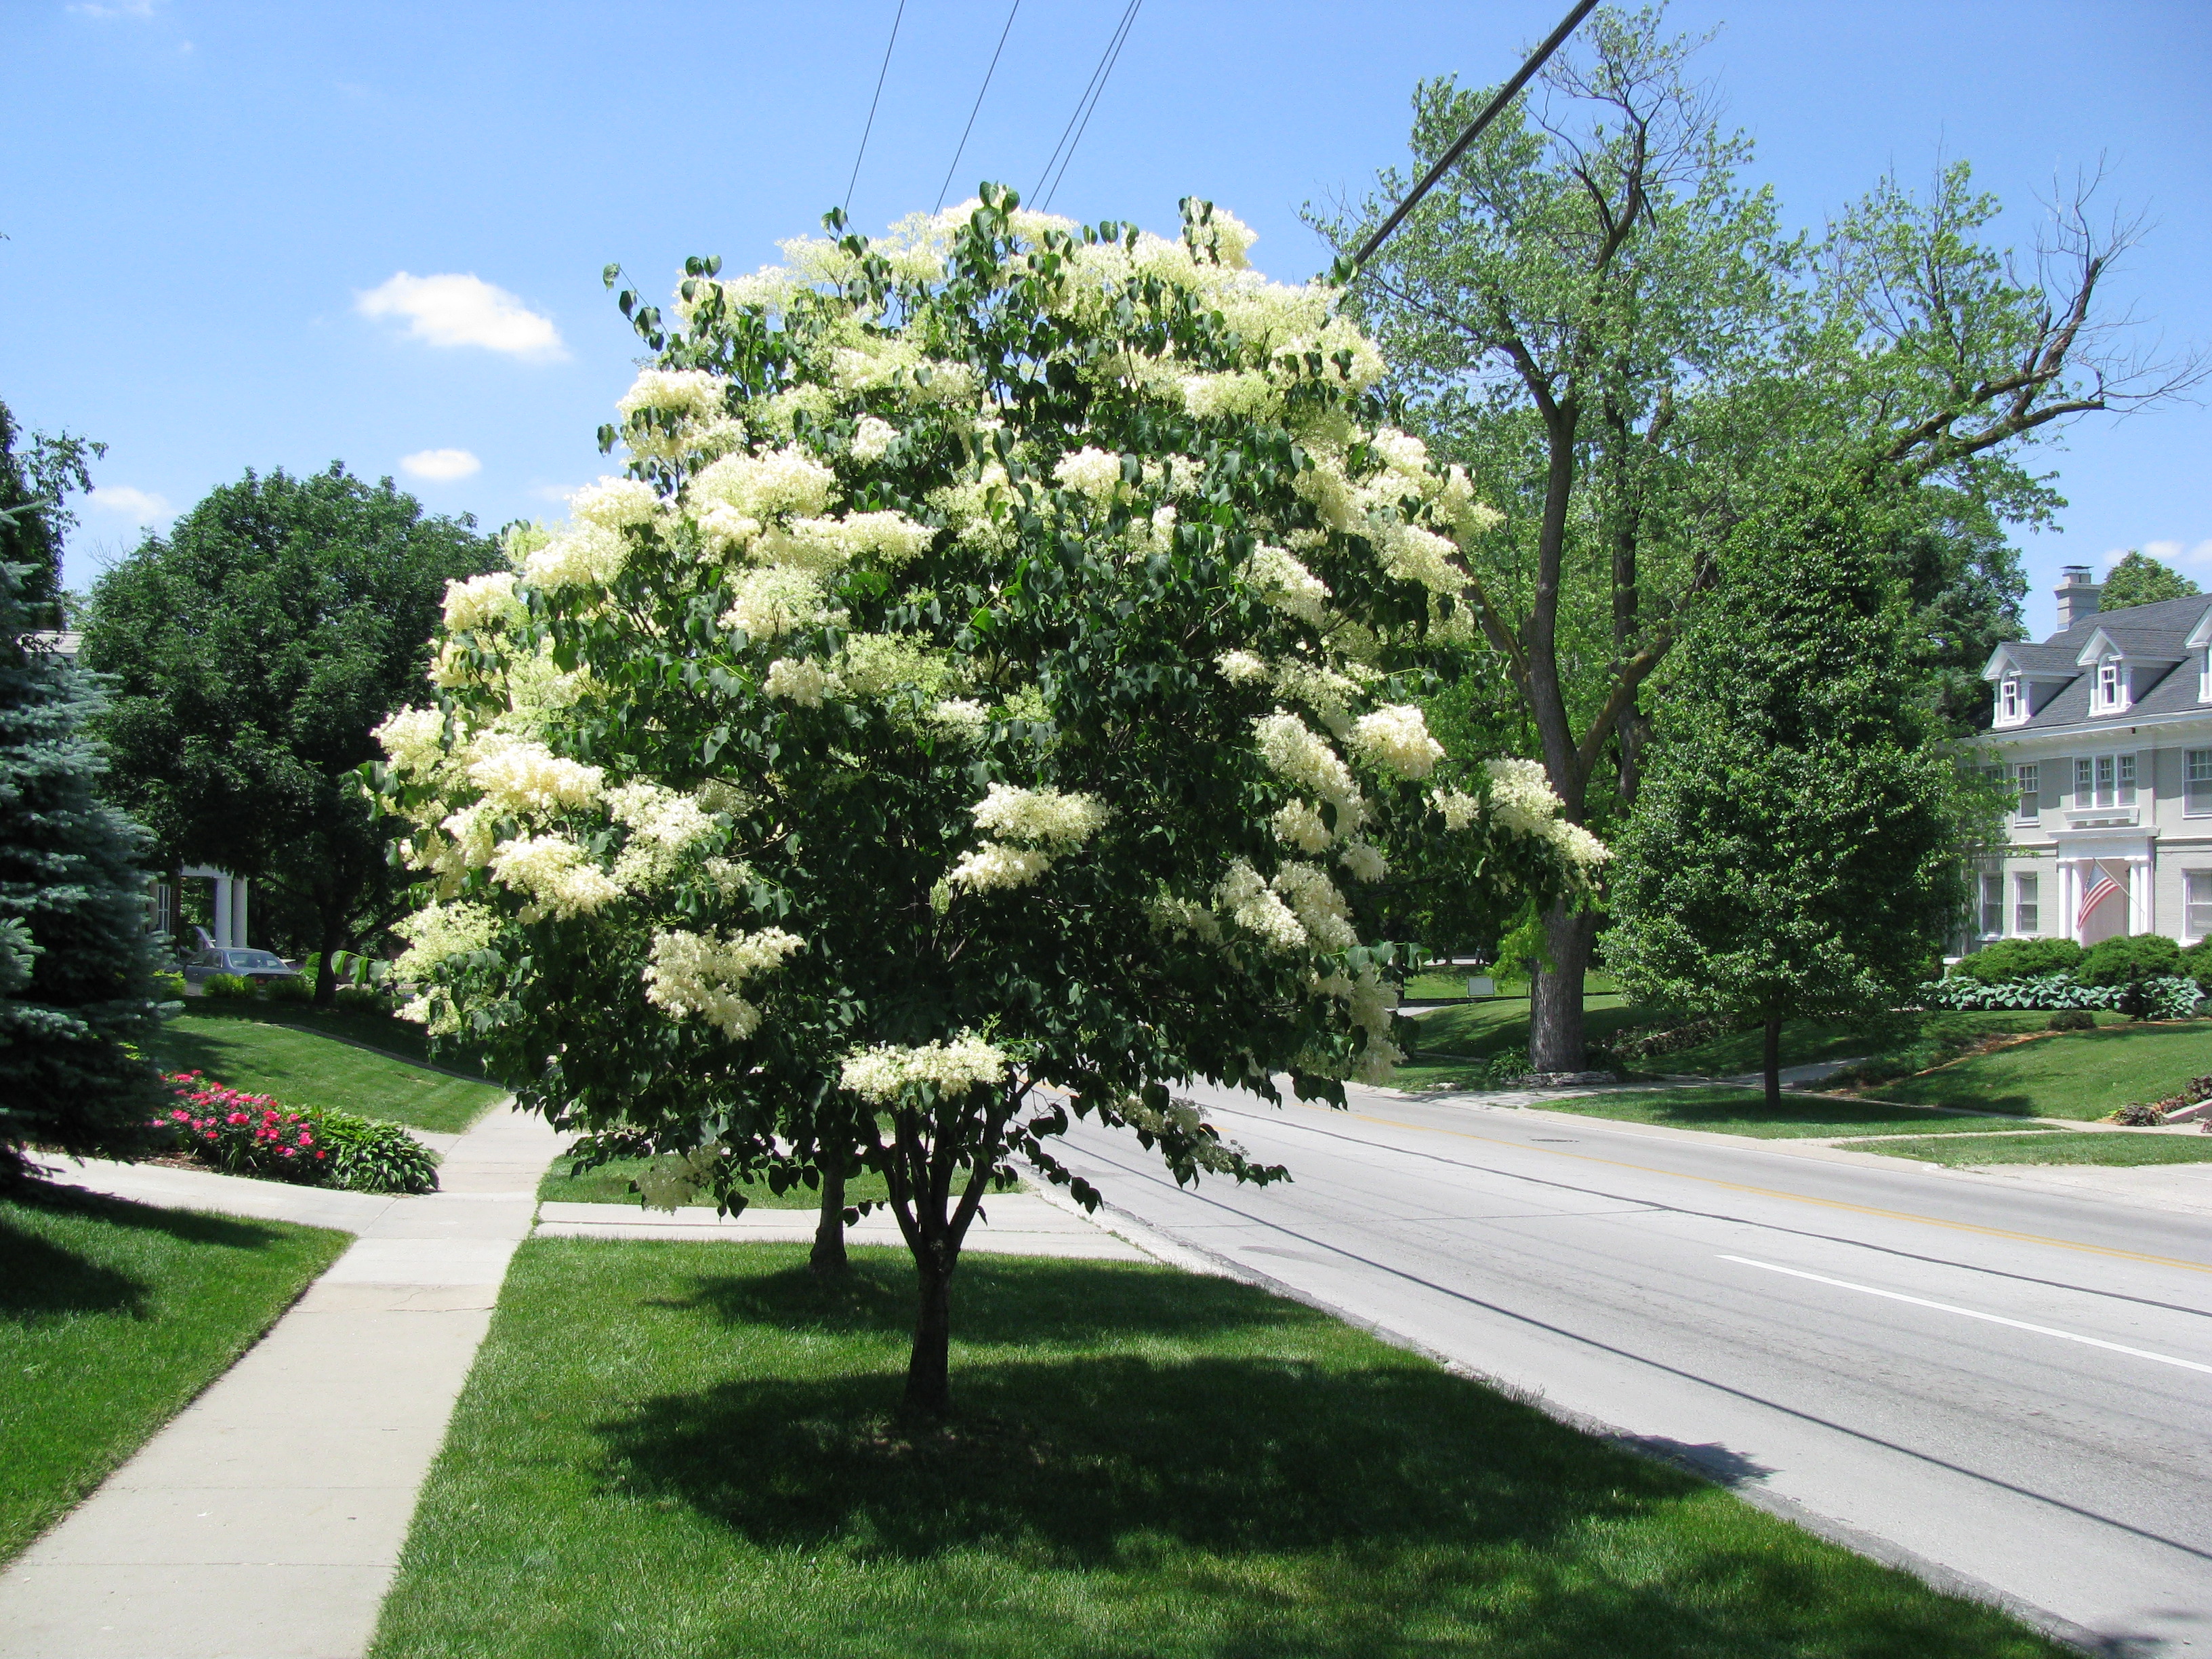 Japanese Tree Lilac, Nebraska Extension Acreage Insights May 2017. http://acreage.unl.edu/enews-may-2017